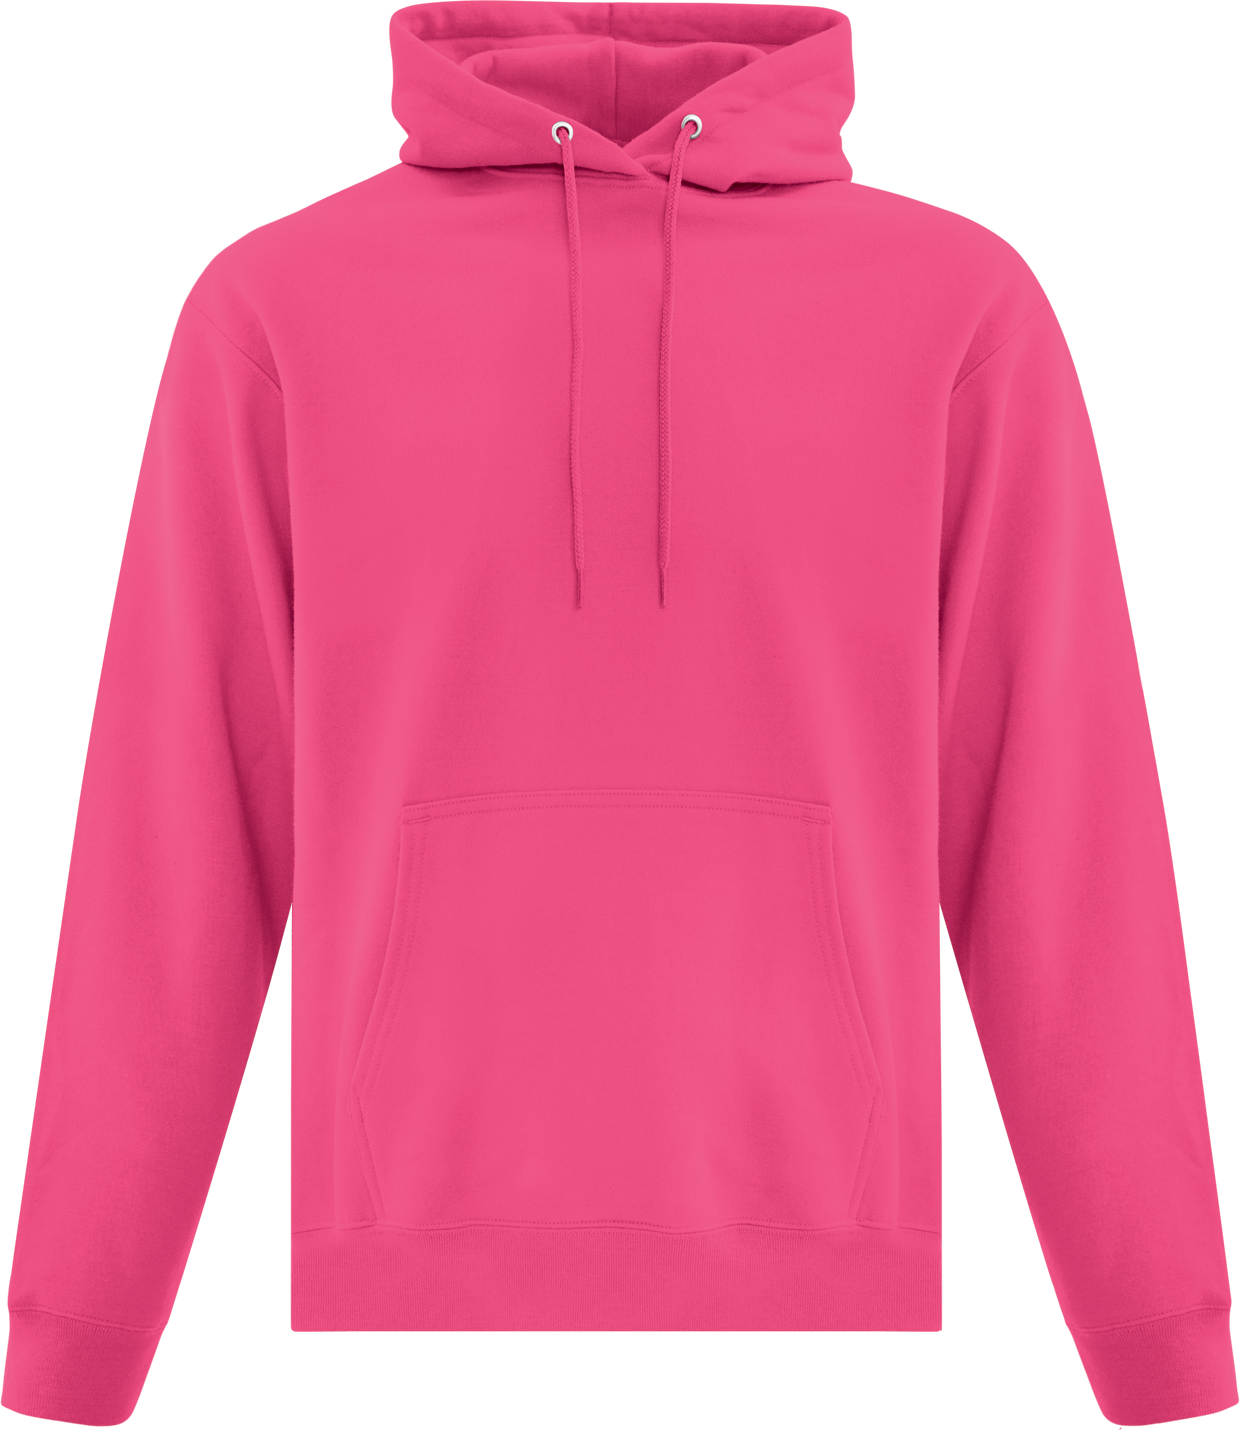 sangria colour basic hoodie